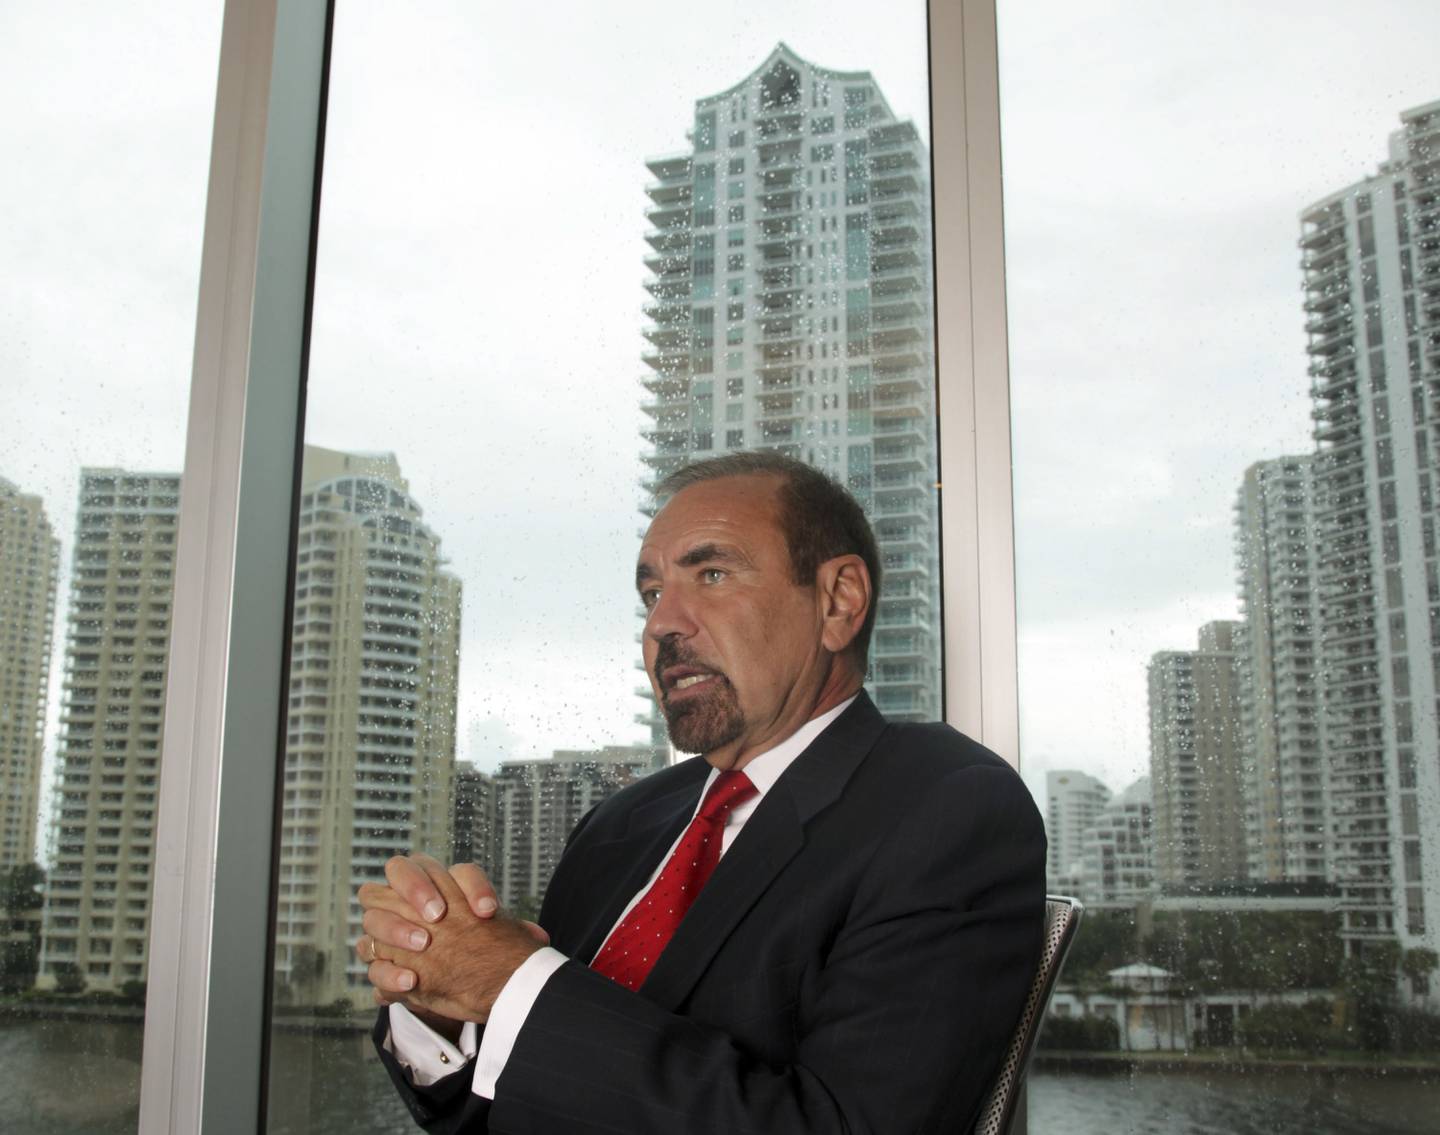 Miami Real Estate Billionaire Jorge Perez.